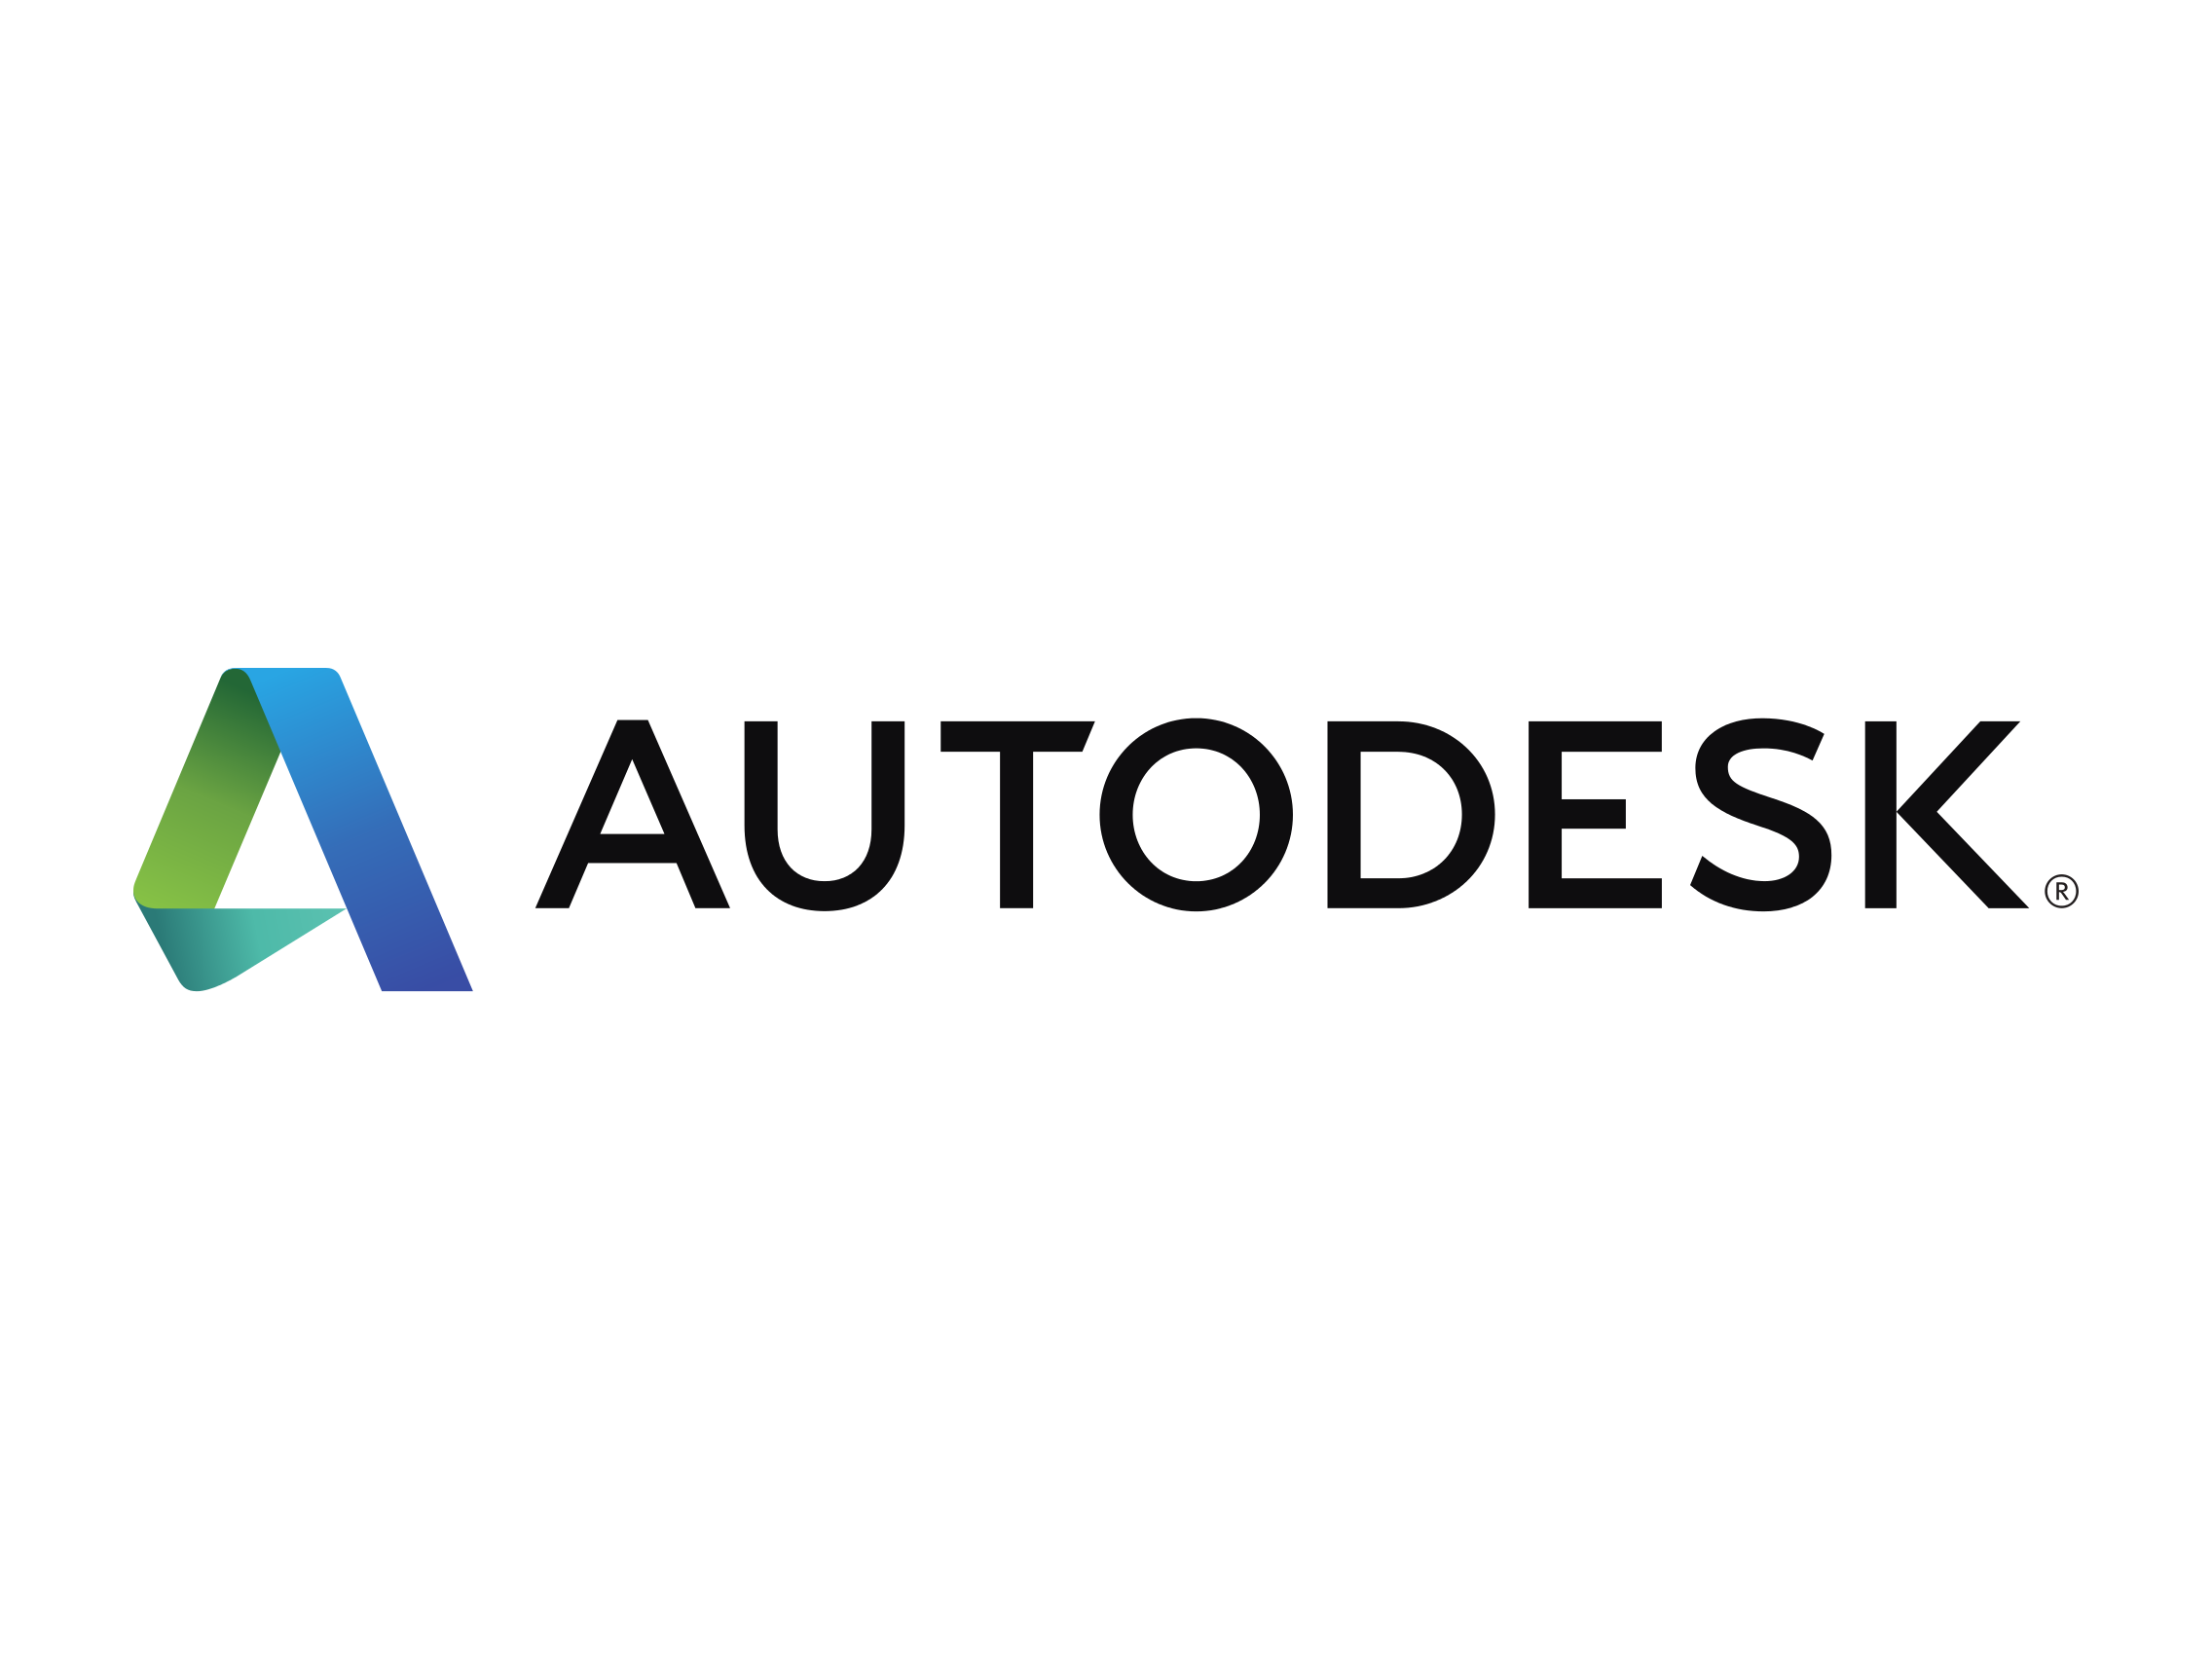 Autodesk-logo-and-wordmark.png